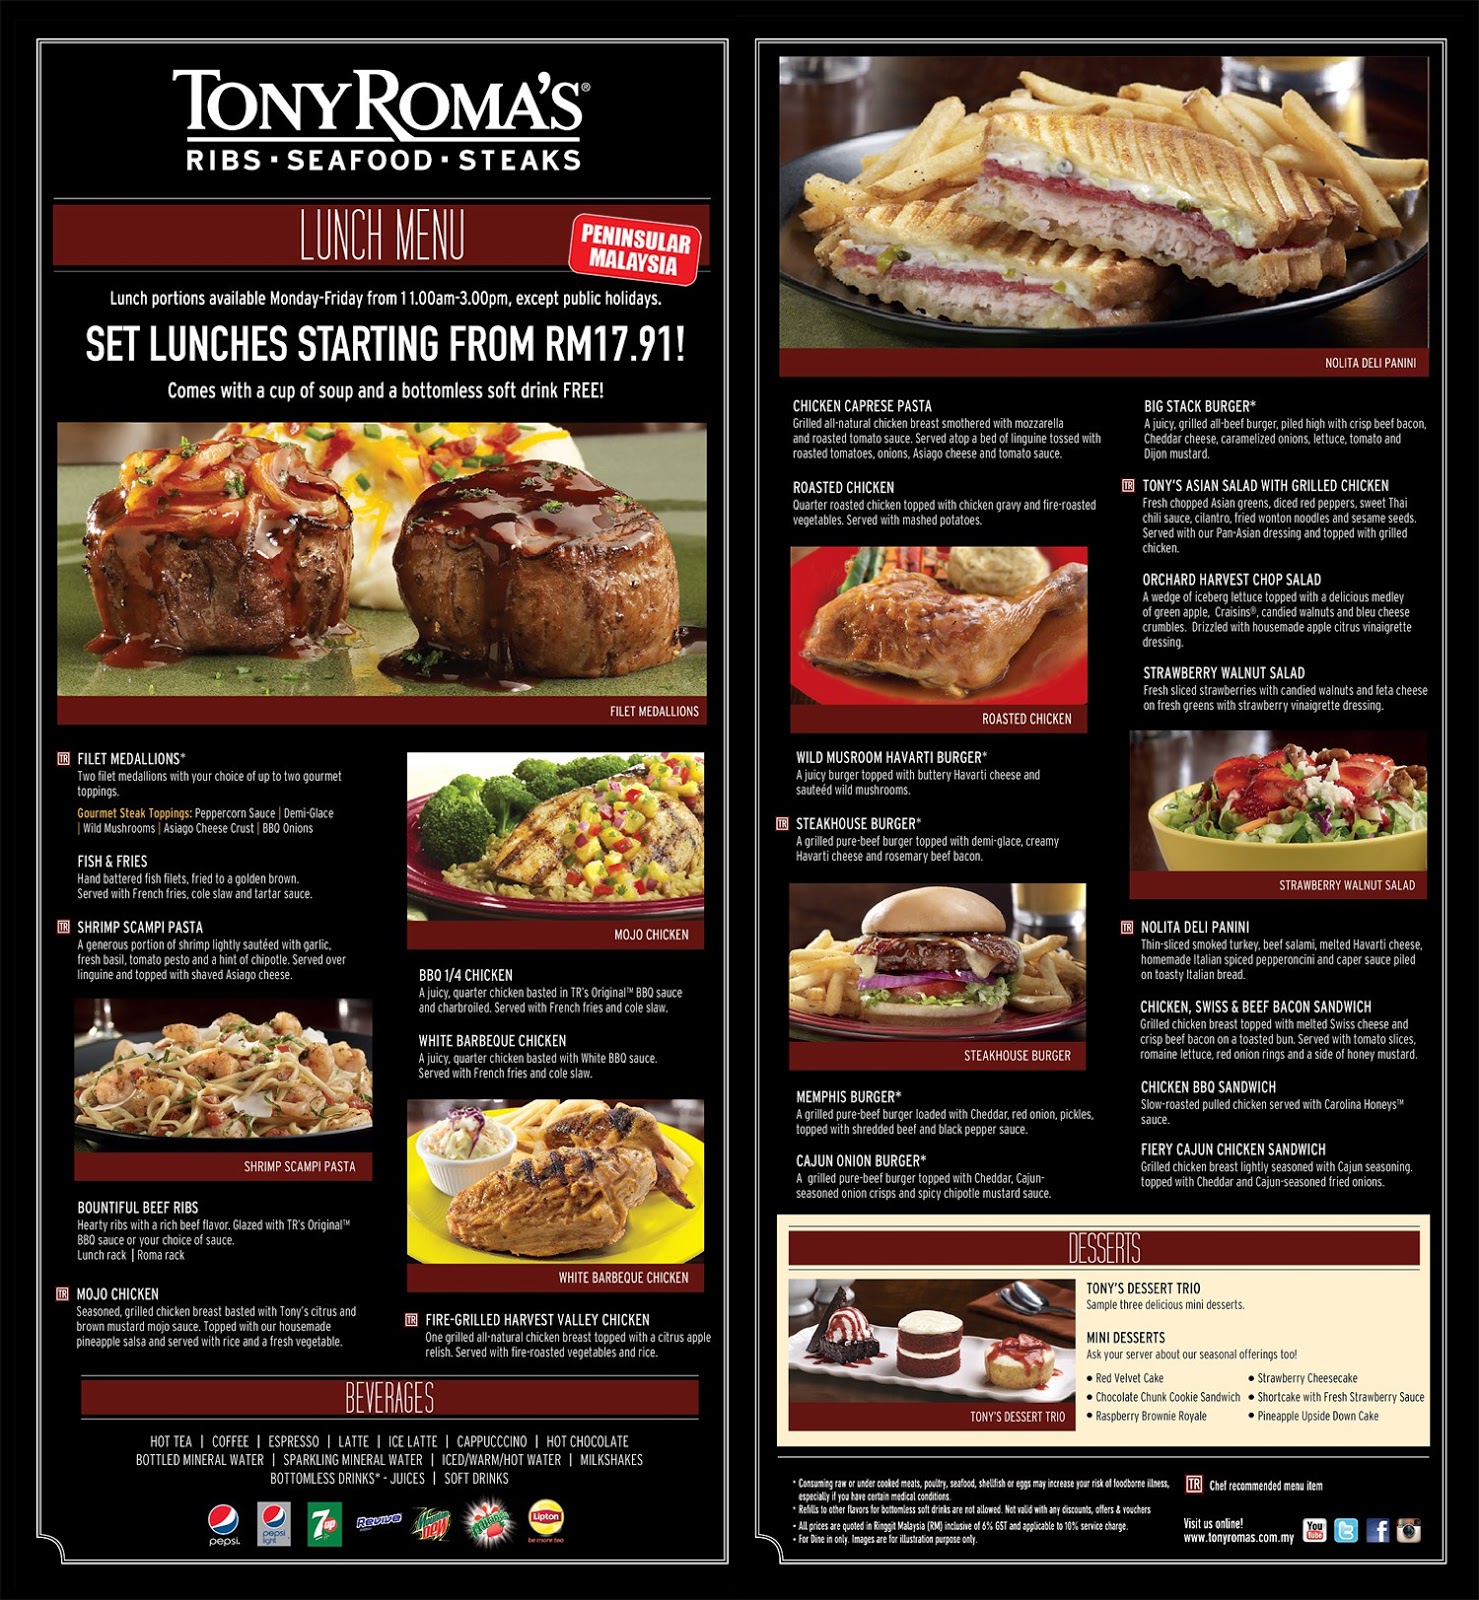 Tony Romas Menu Malaysia : Tony Roma's: Lunch Menu Promotion - Food